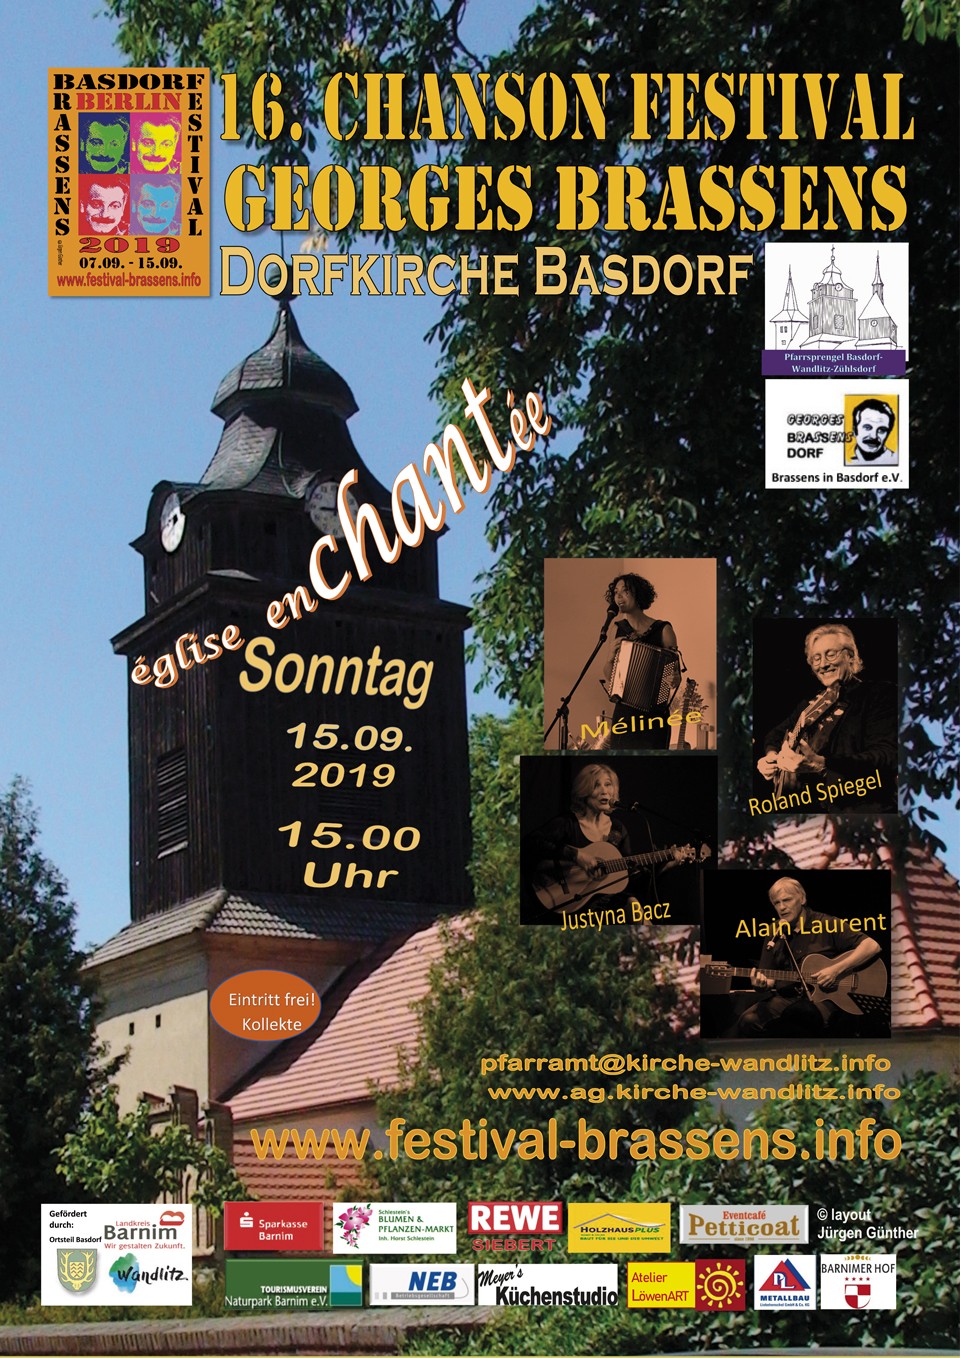 Basdorf Festival Brassens